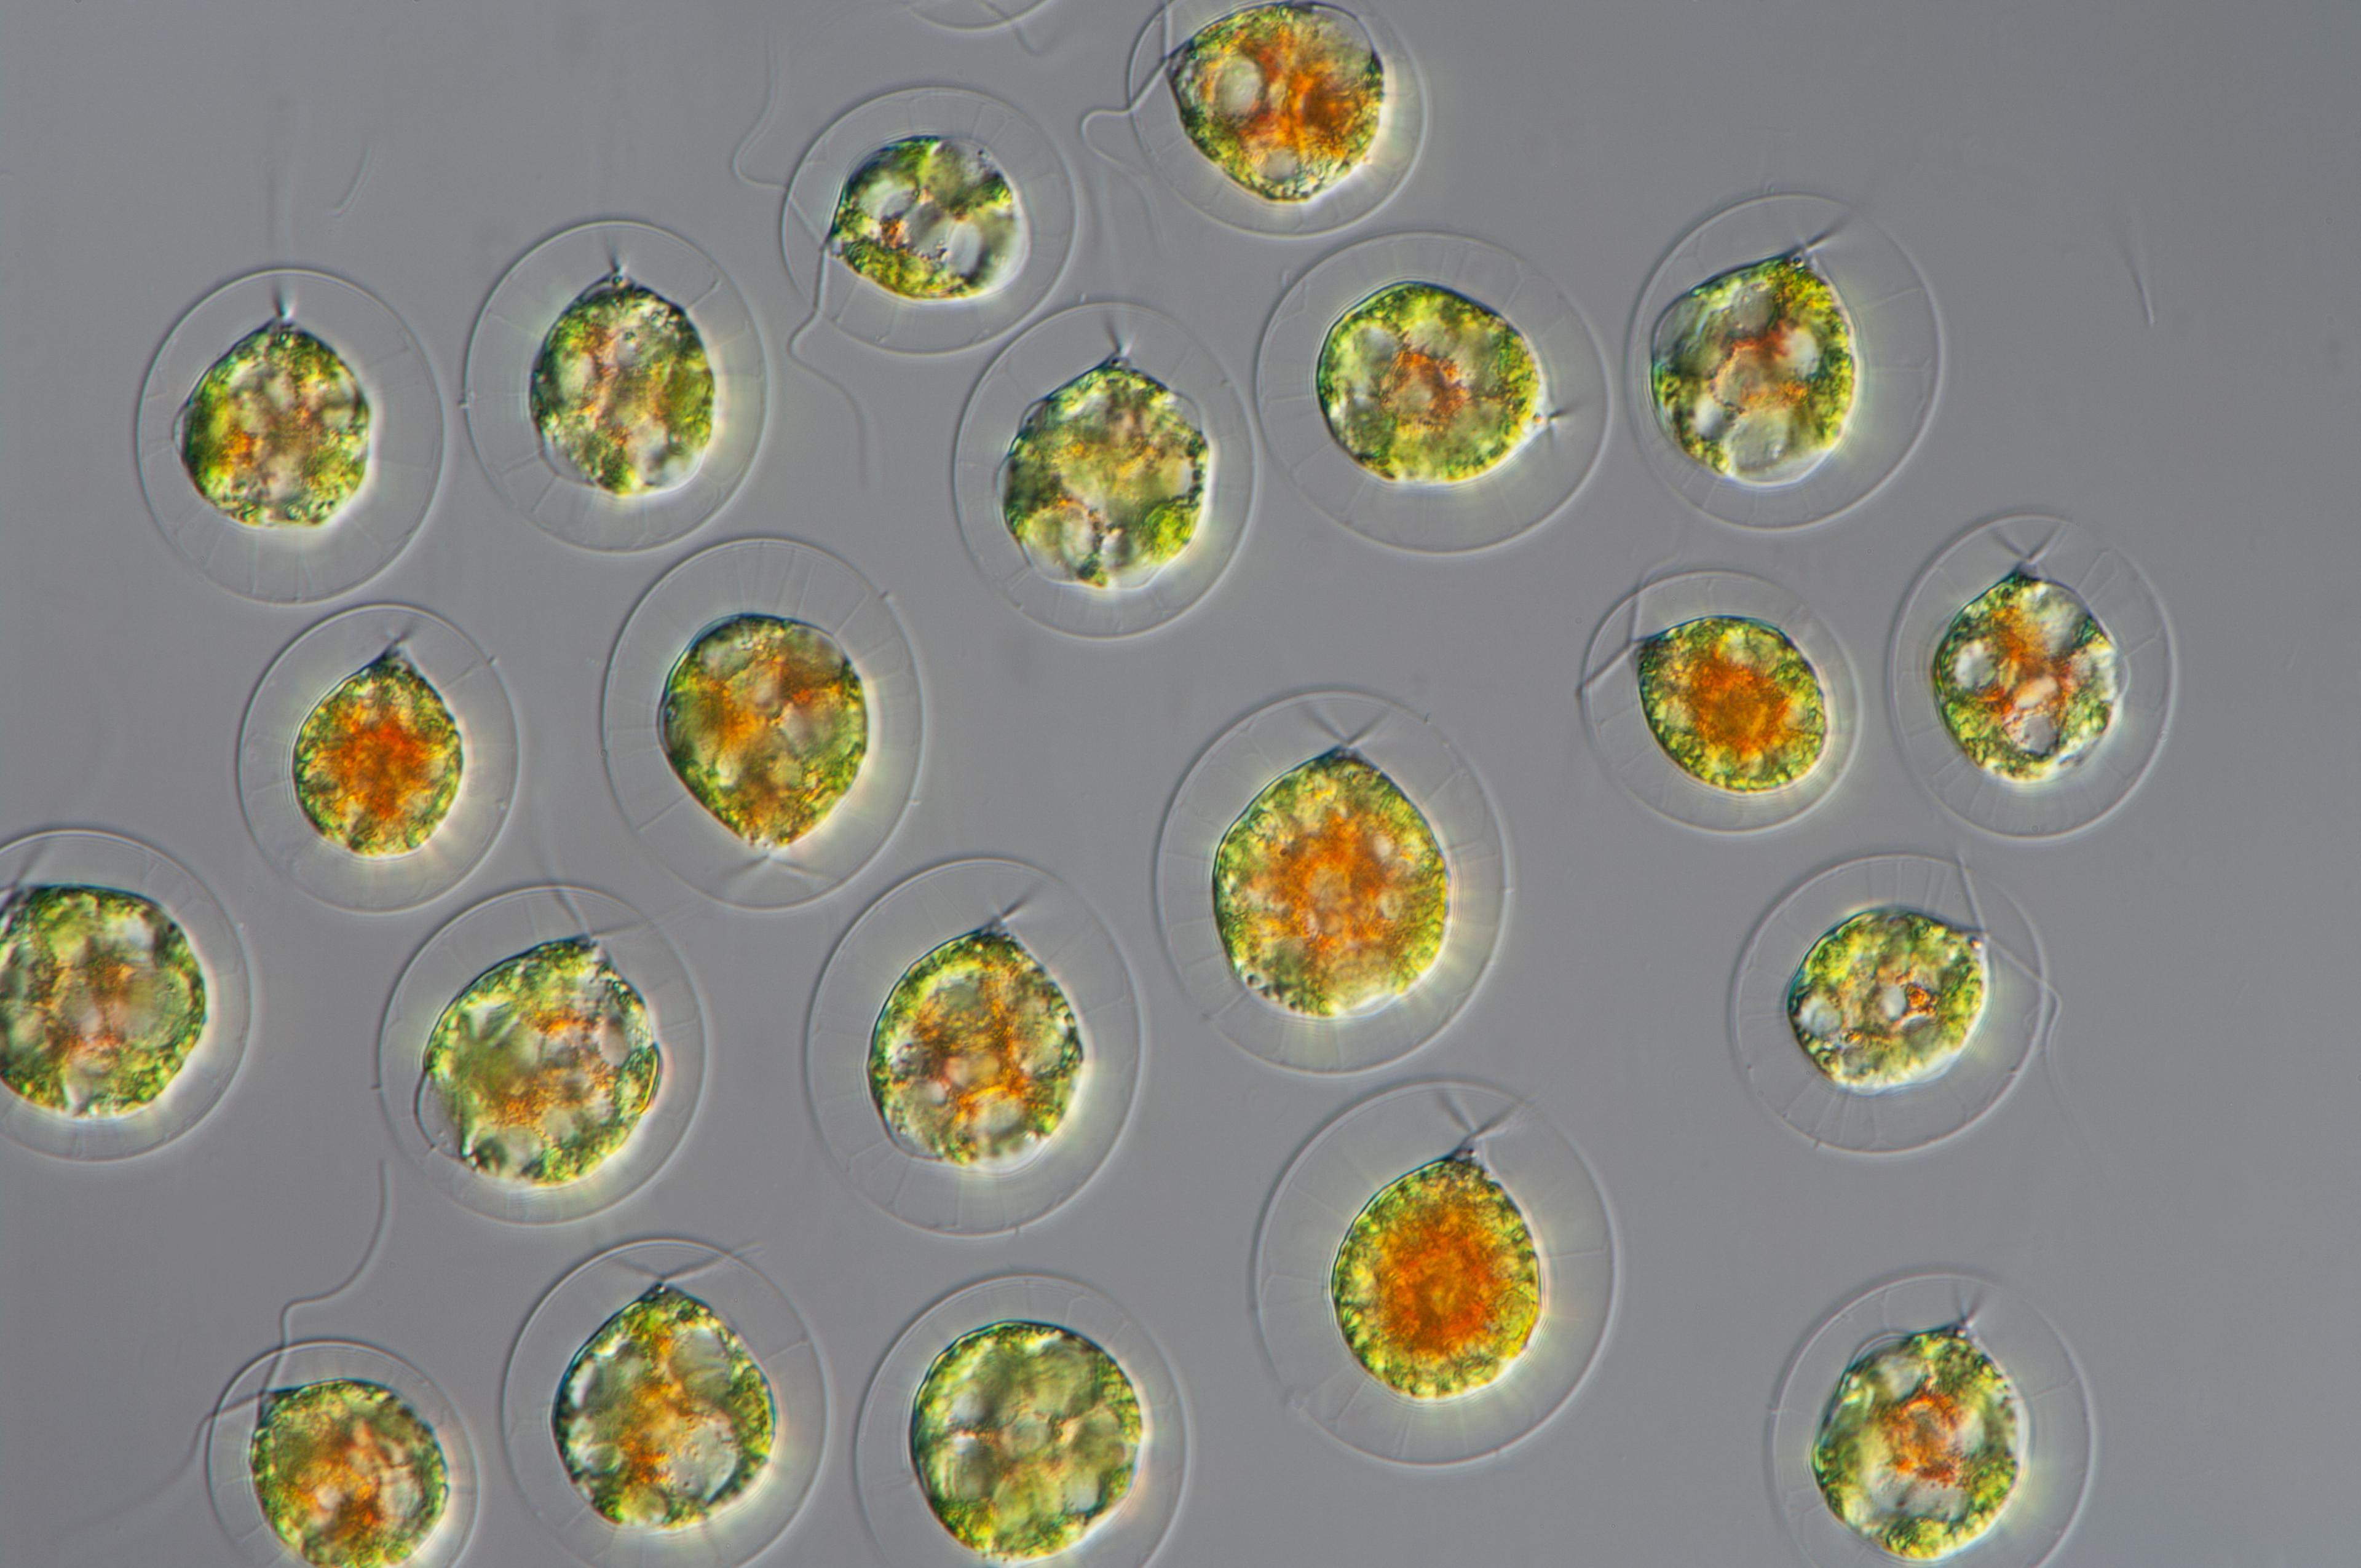 The freswater microalga Haematococcus pluvialis